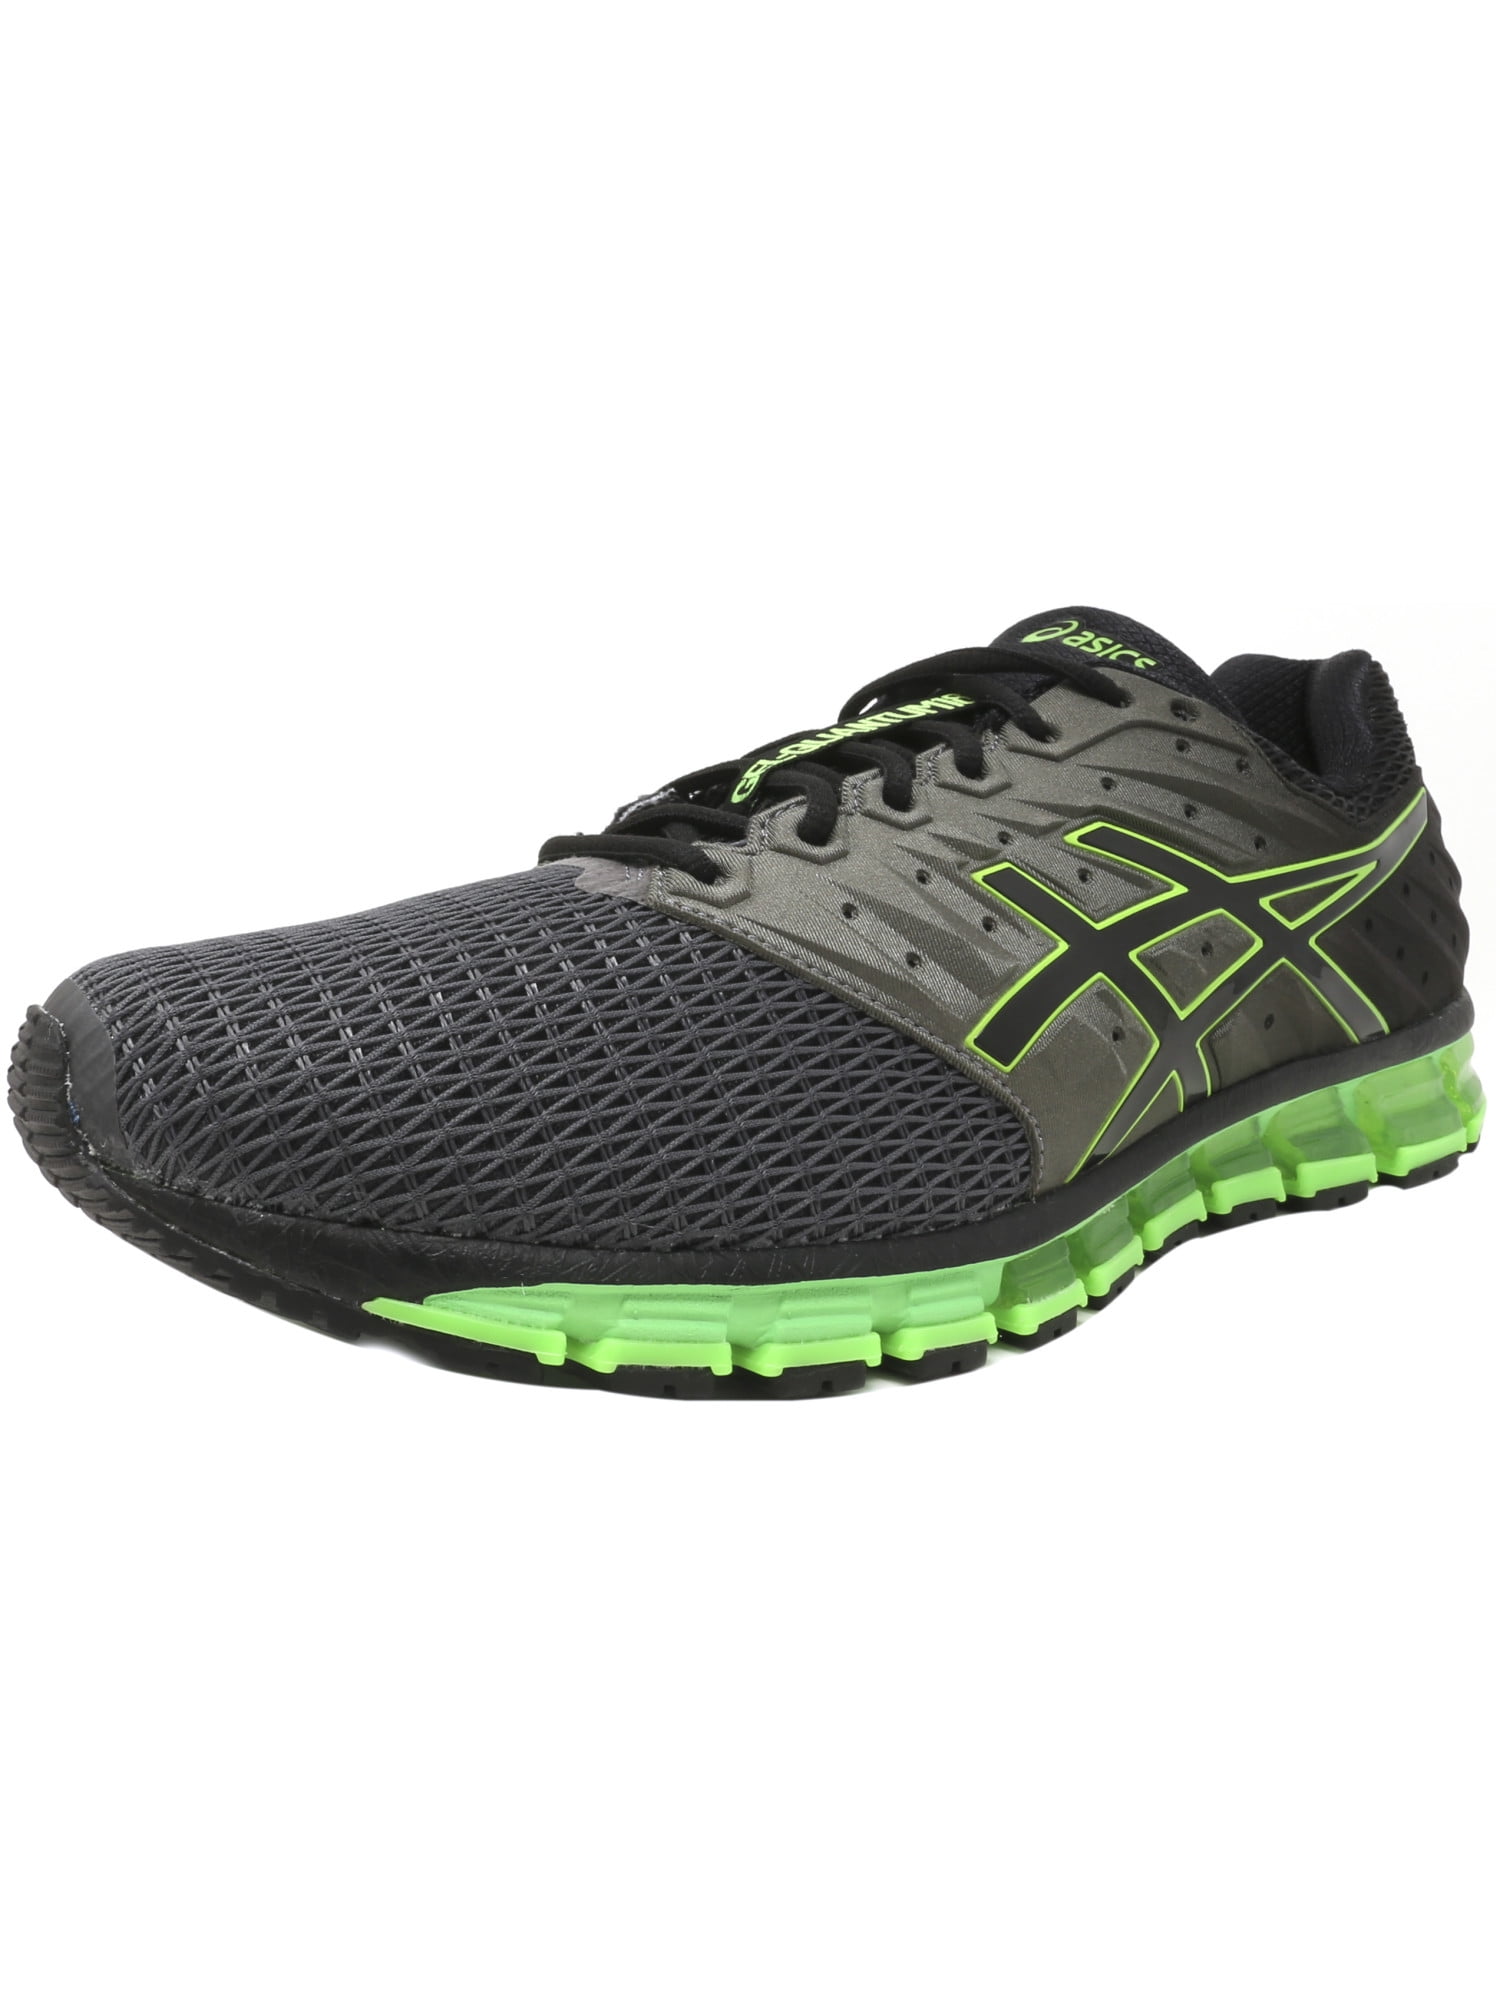 Asics Men's Gel-Quantum 180 2 Carbon / Black Green Gecko Ankle-High Fabric Running Shoe - -